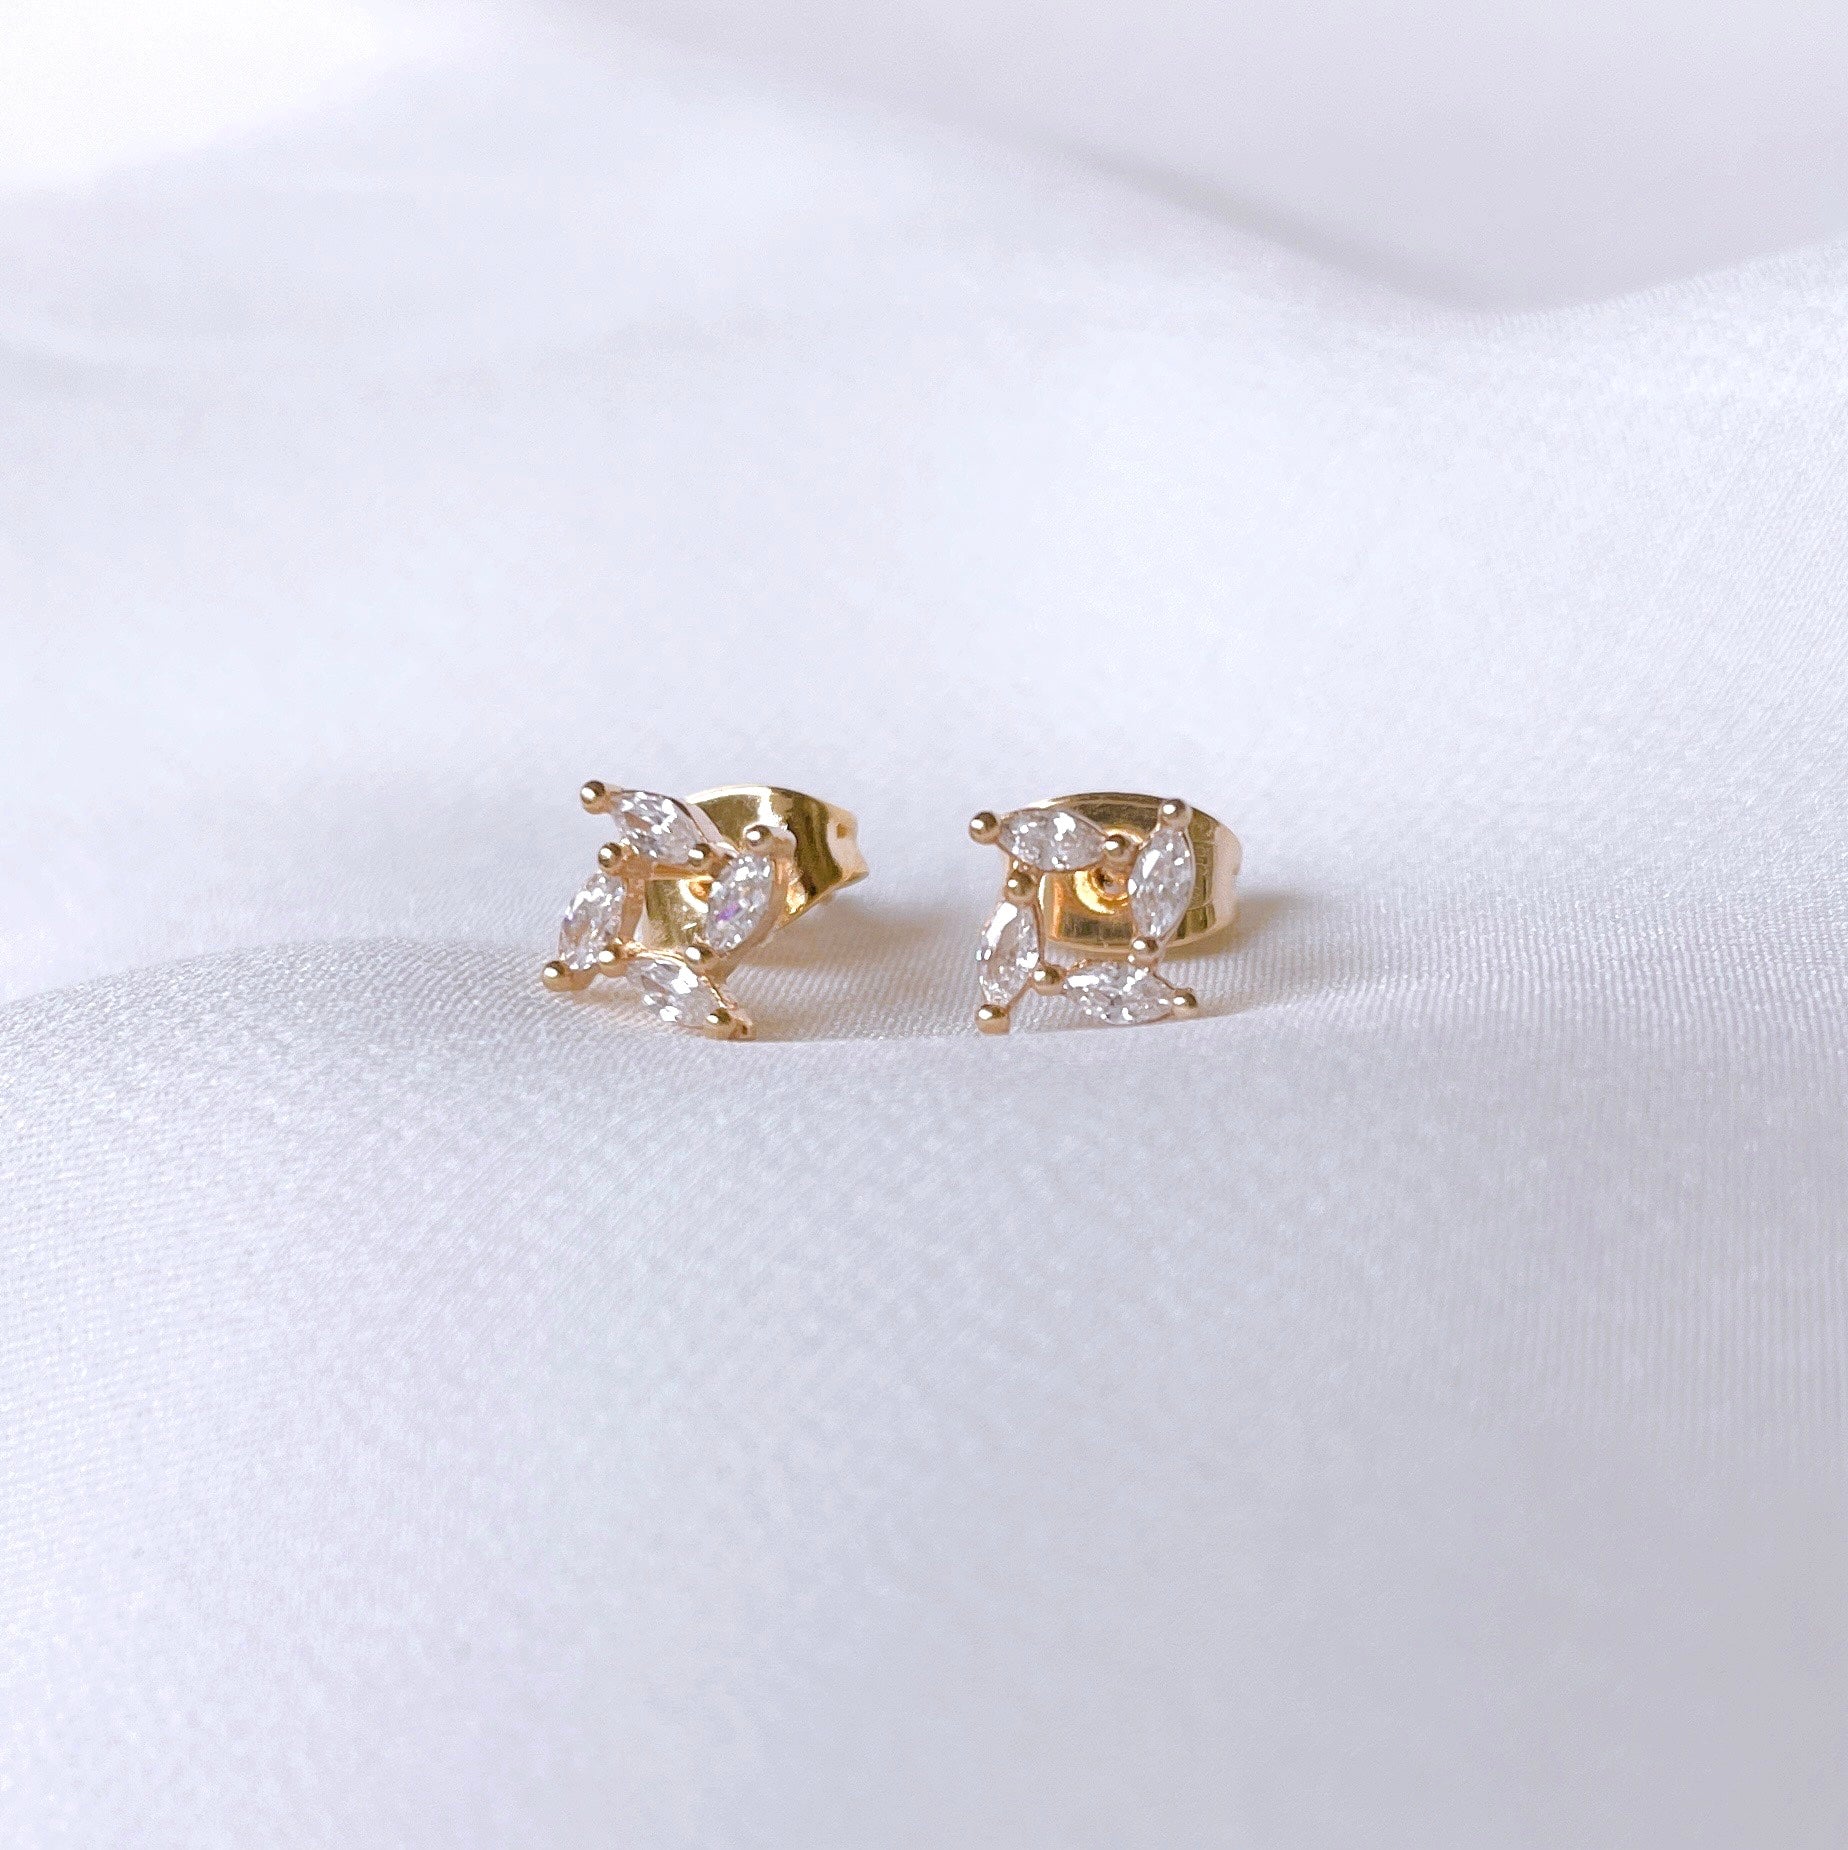 Gold-plated “Chiara” earrings